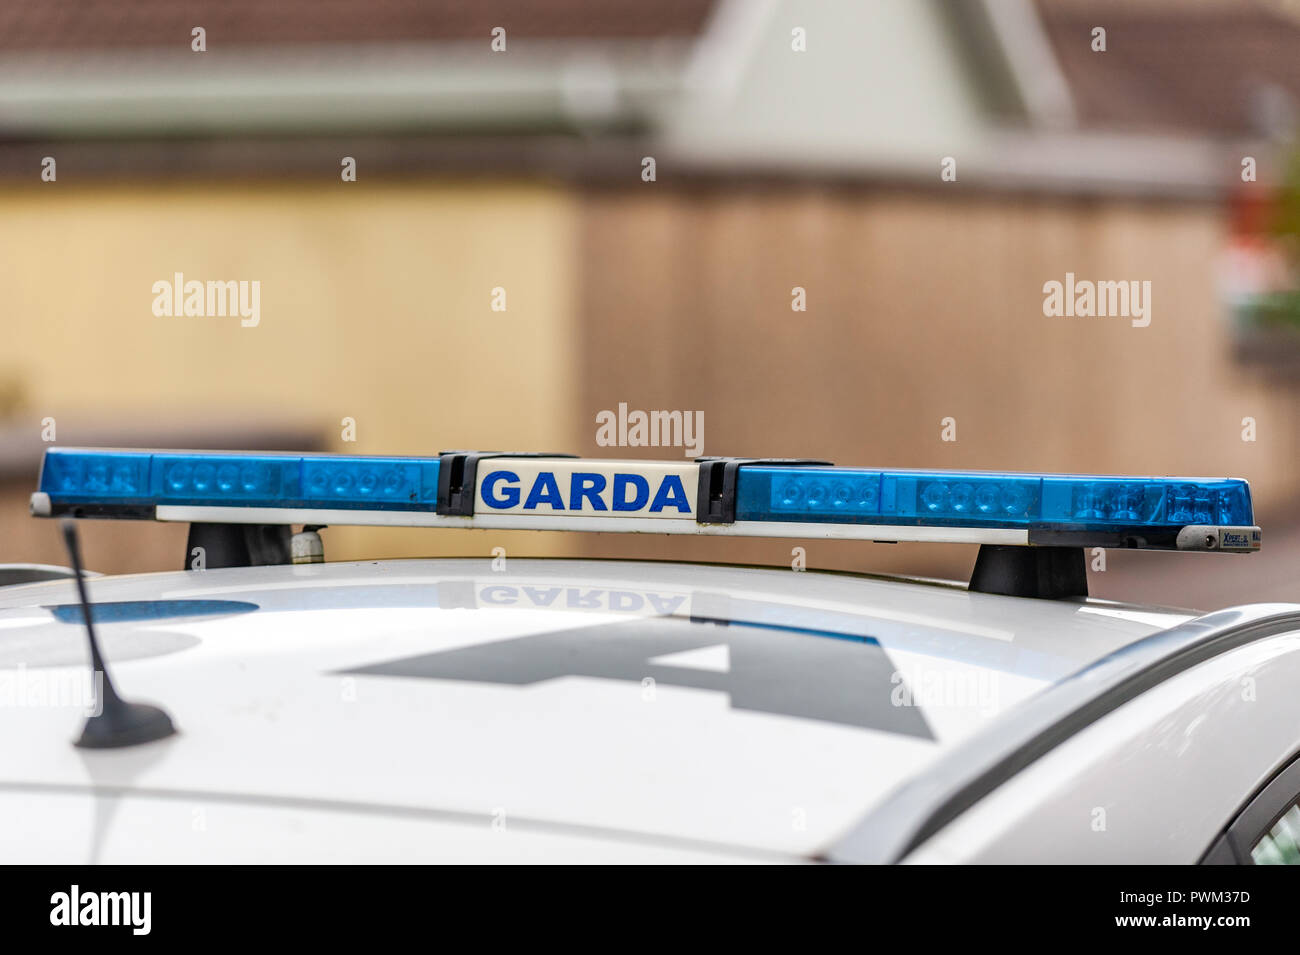 Garda (Irish Police) lights on top of a patrol car in Ireland. Stock Photo